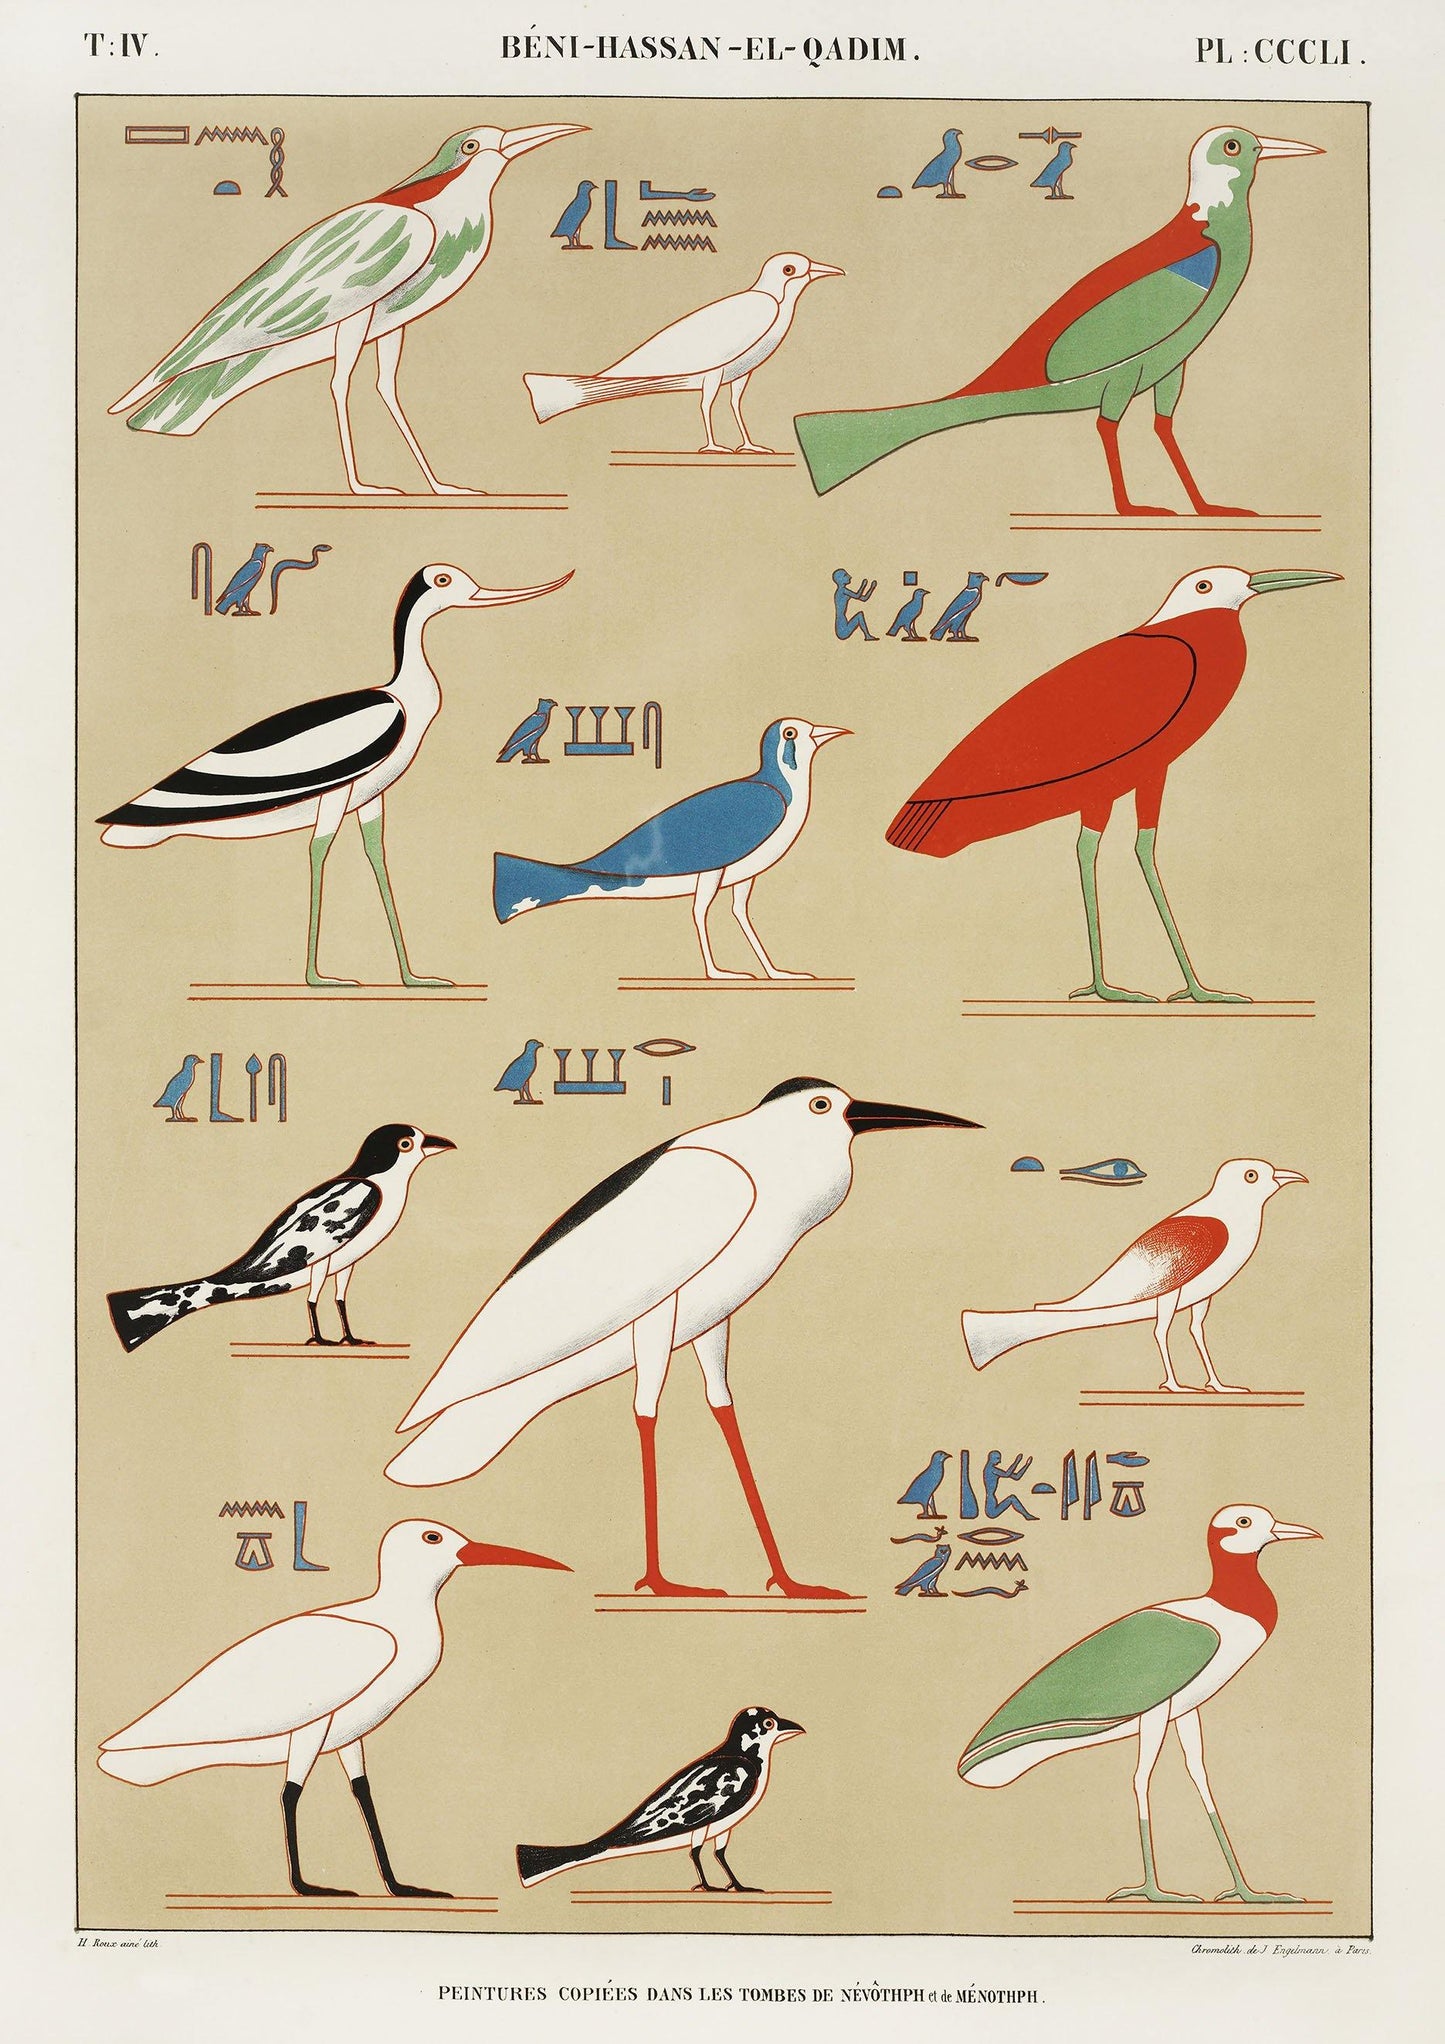 EGYPTIAN BIRDS PRINTS: Vintage Bird Types Art Illustrations - Pimlico Prints